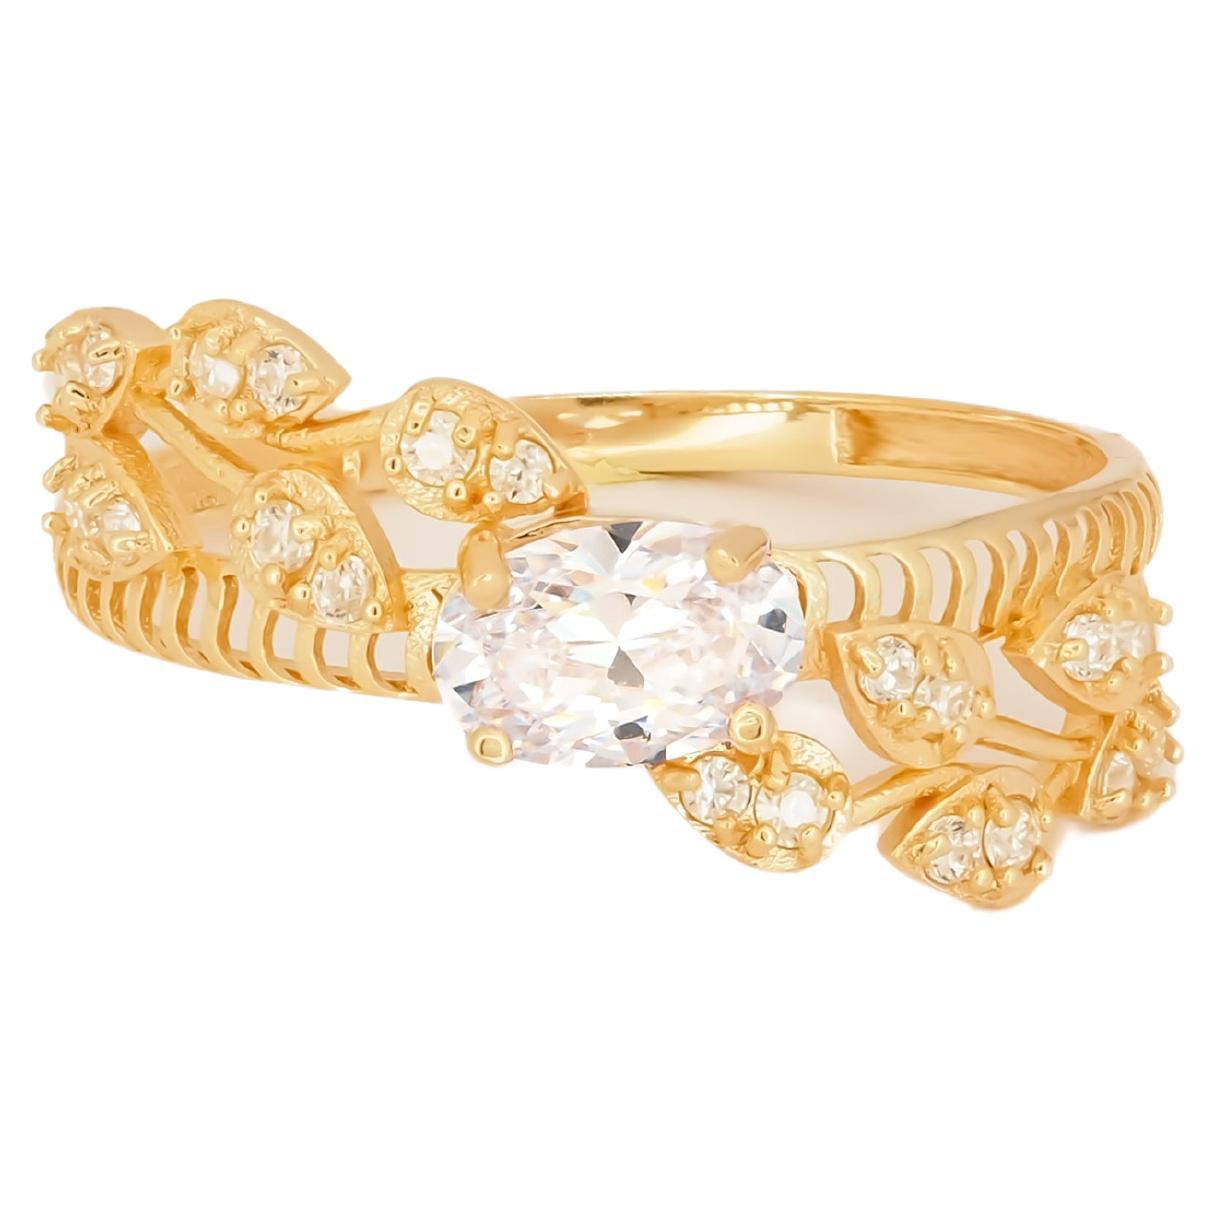 Oval moissanite 14k gold engagement ring. For Sale